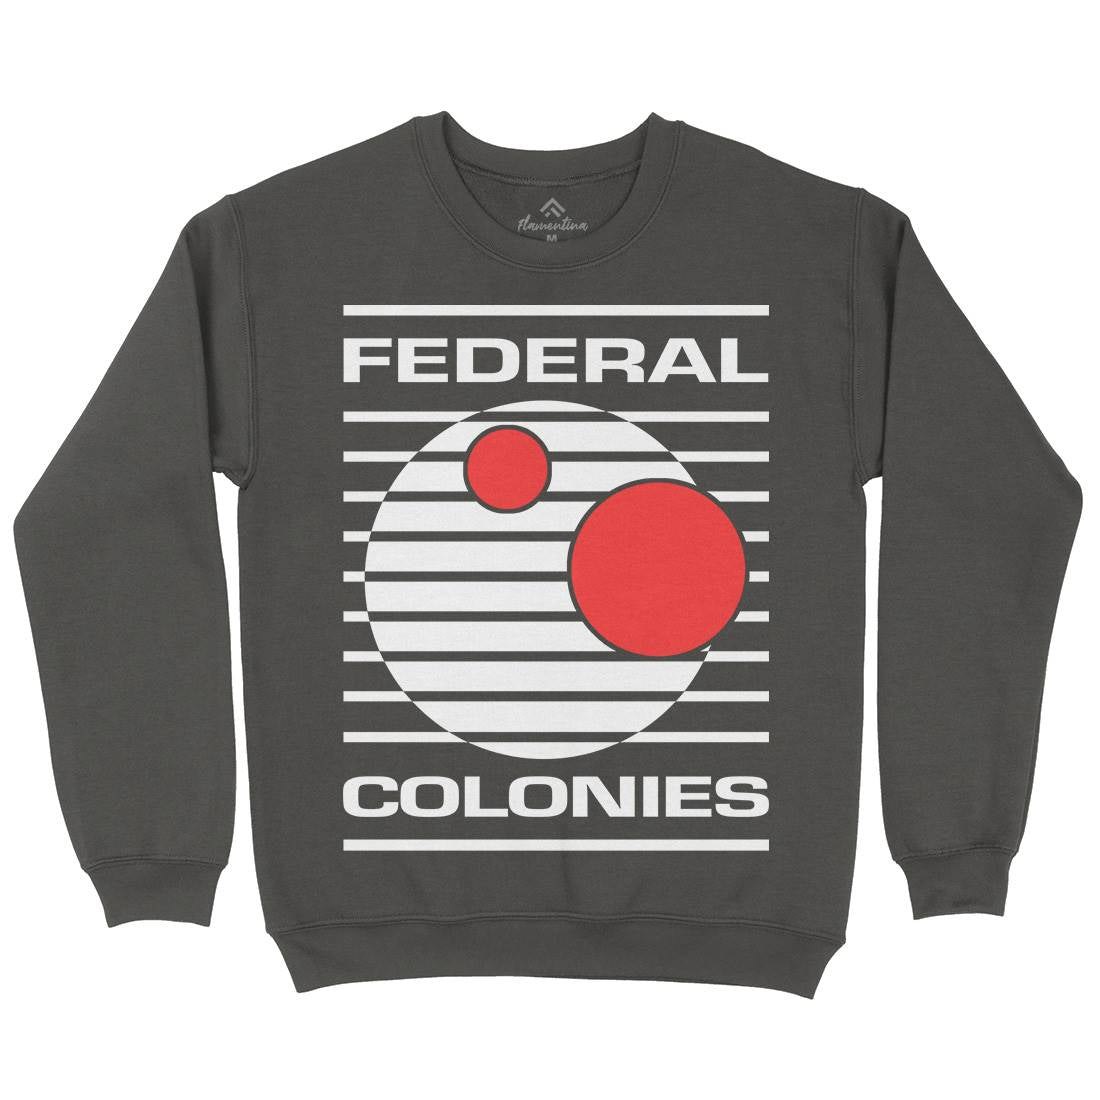 Federal Colonies Mens Crew Neck Sweatshirt Space D409